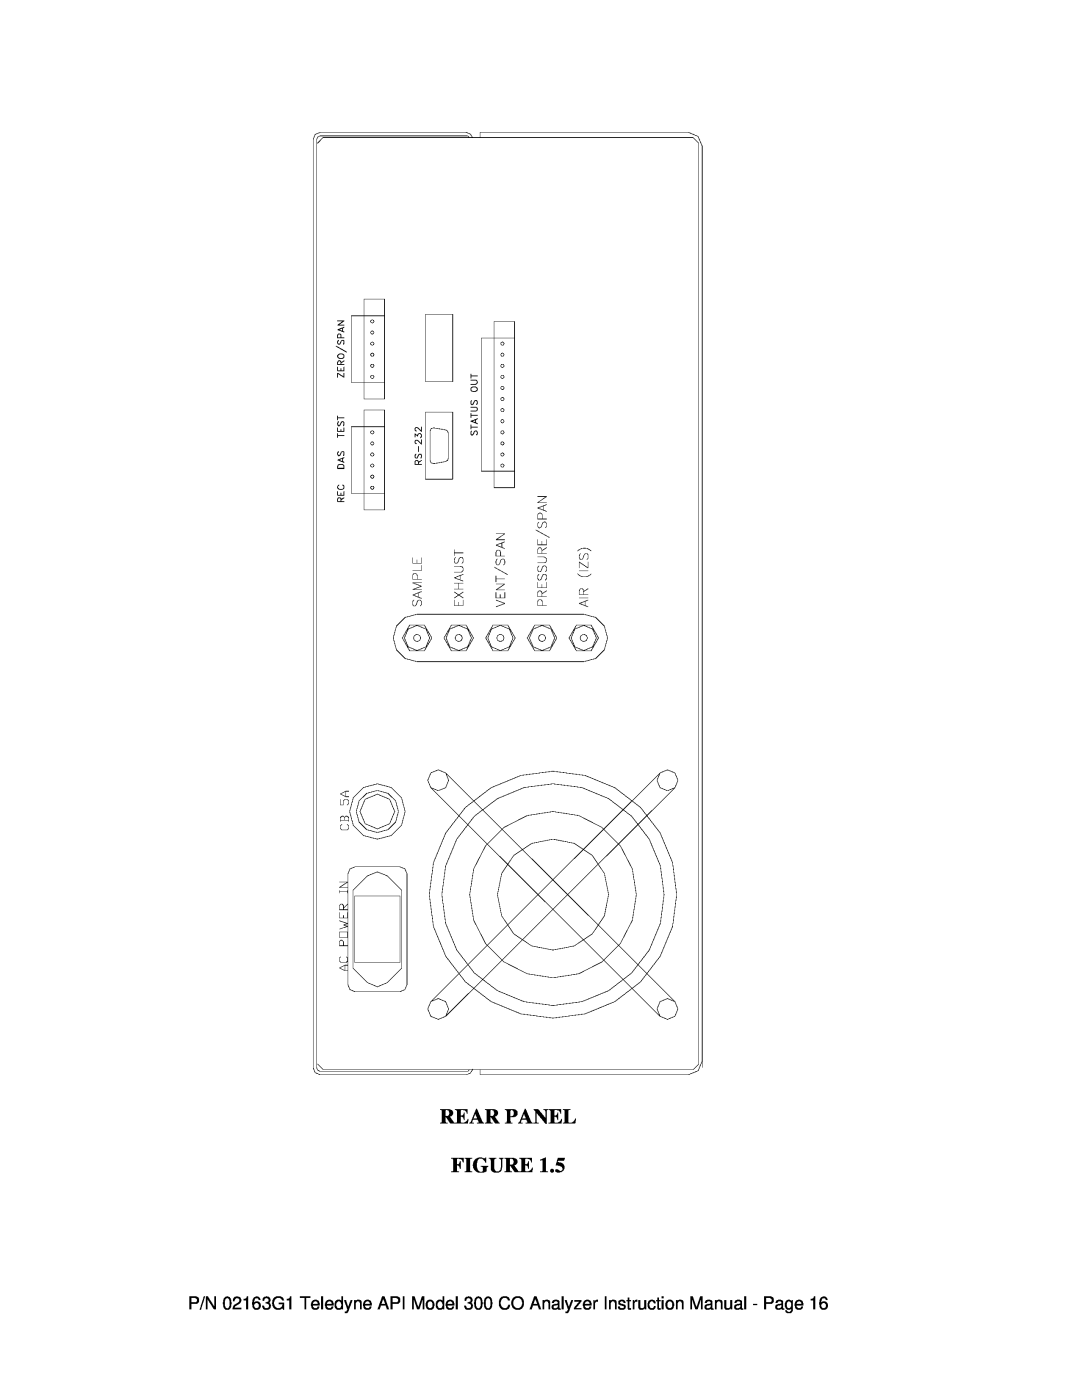 Teledyne 300 instruction manual Rear Panel Figure 